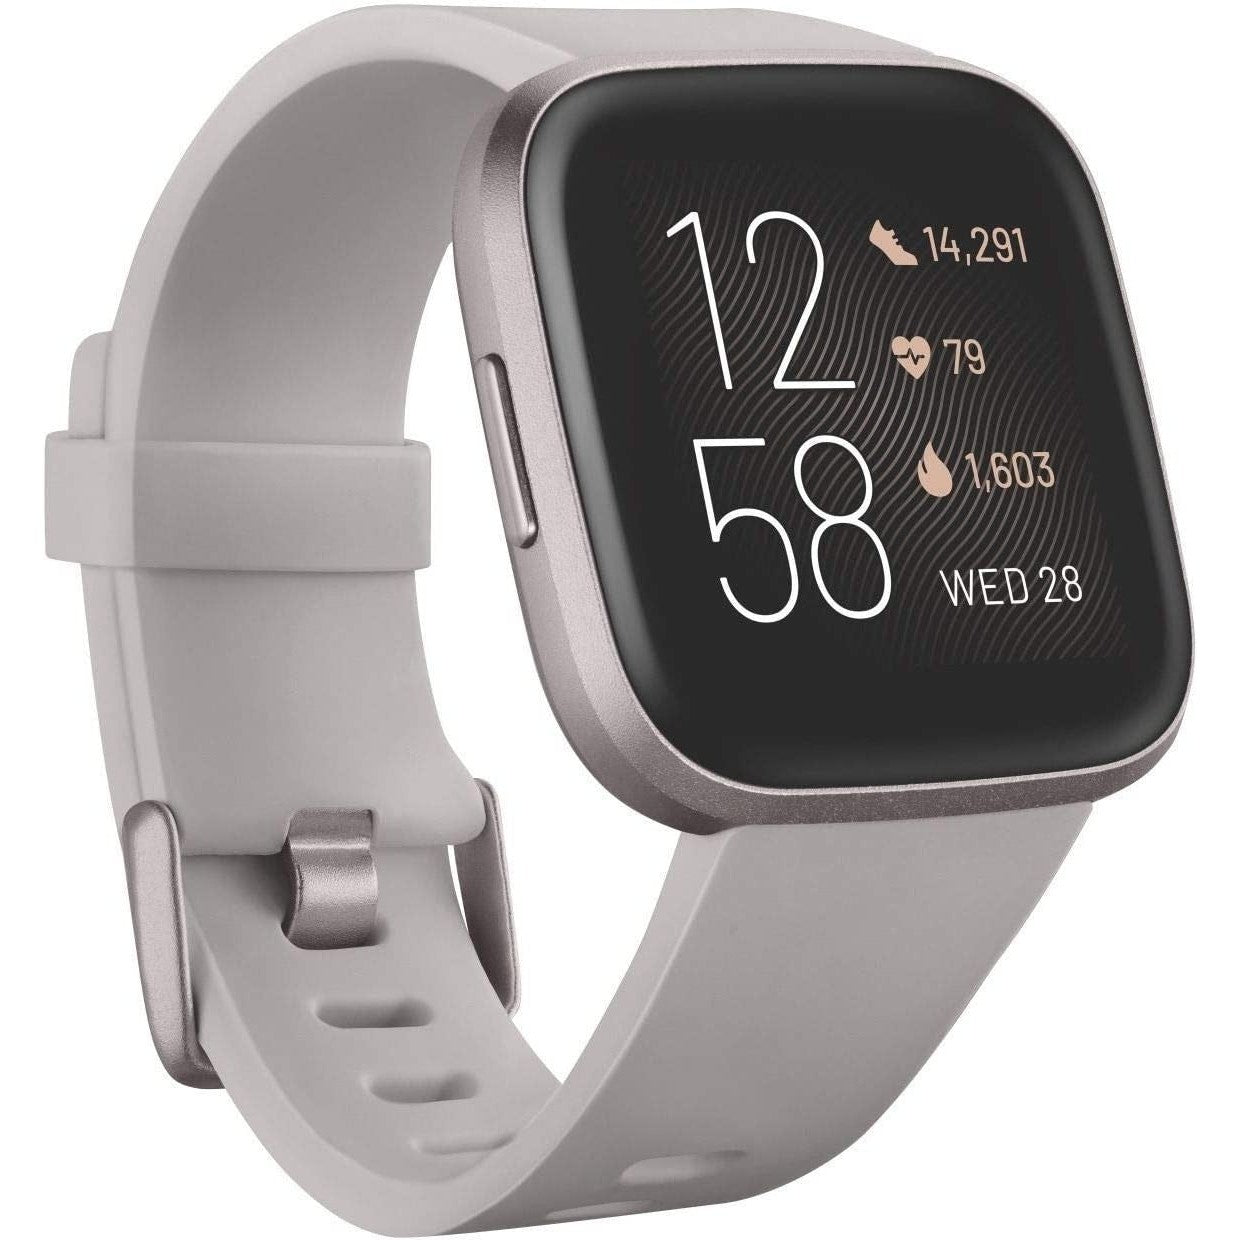 Fitbit Versa 2 Smart Fitness Watch - Mist Grey - Refurbished Good